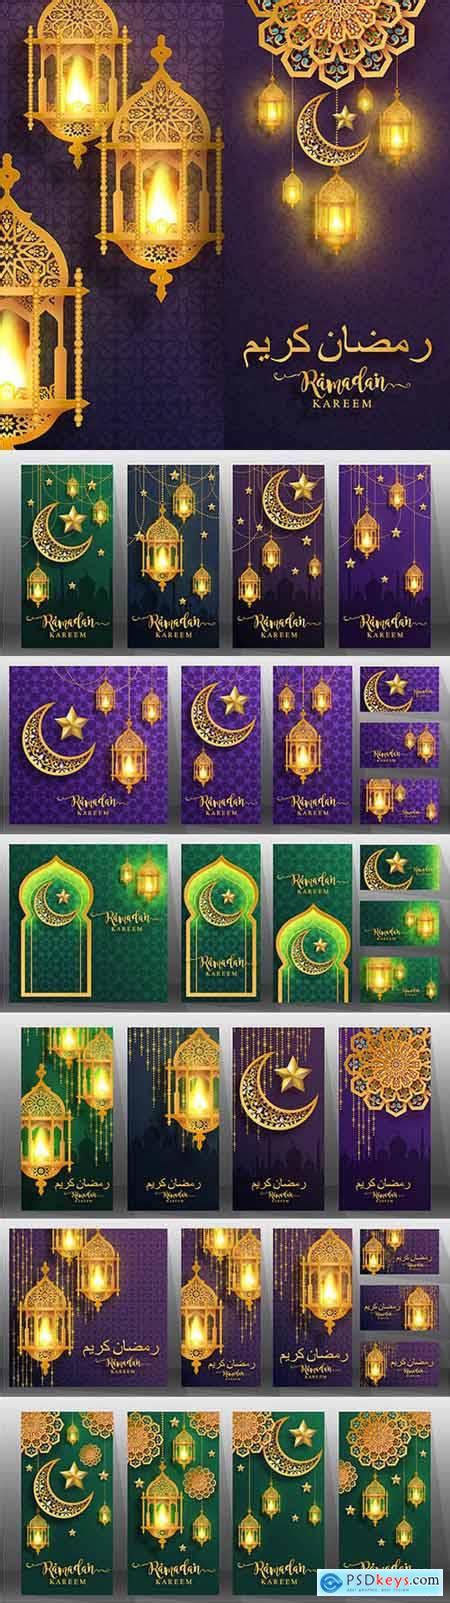 Ramadan Kareem Decorative Greeting Banners Design Free Download